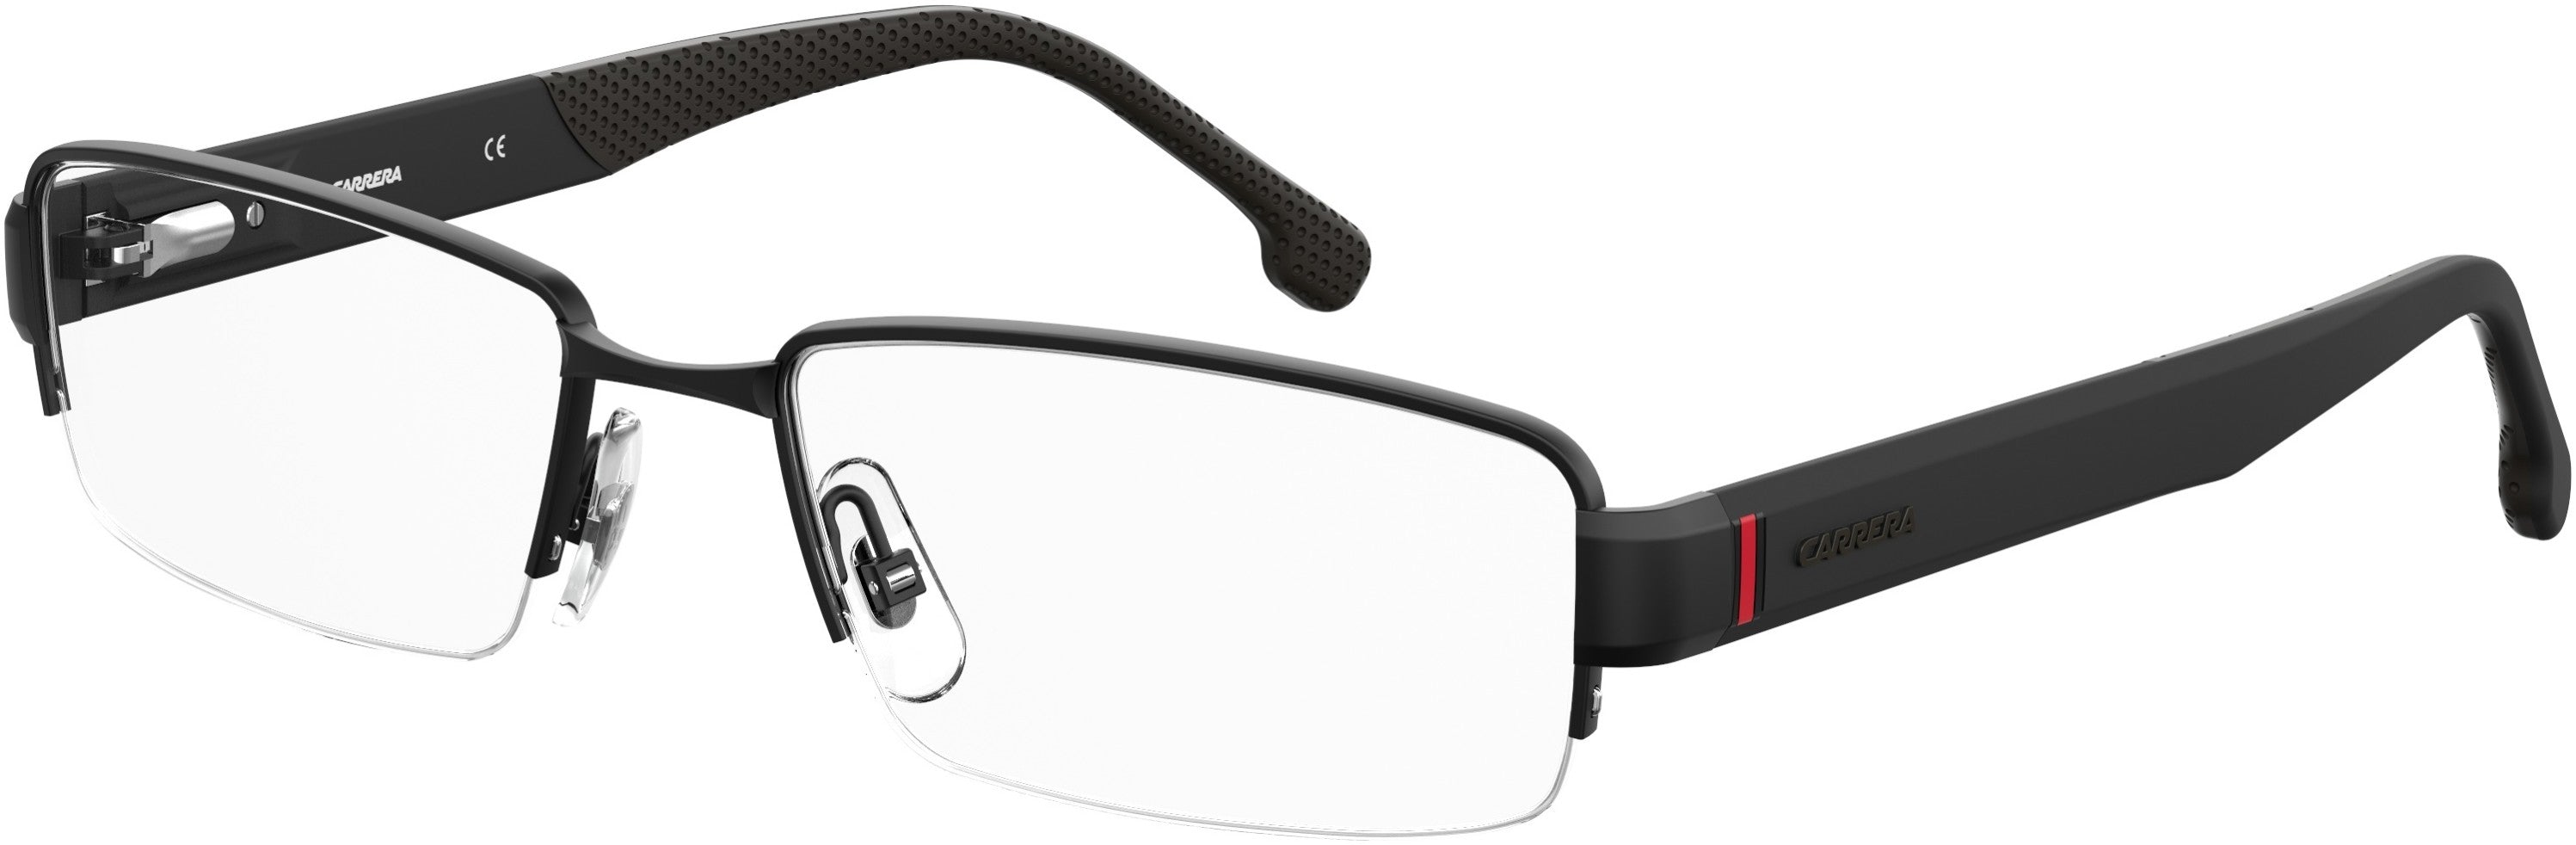  Carrera 8850 Rectangular Eyeglasses 0003-0003  Matte Black (00 Demo Lens)